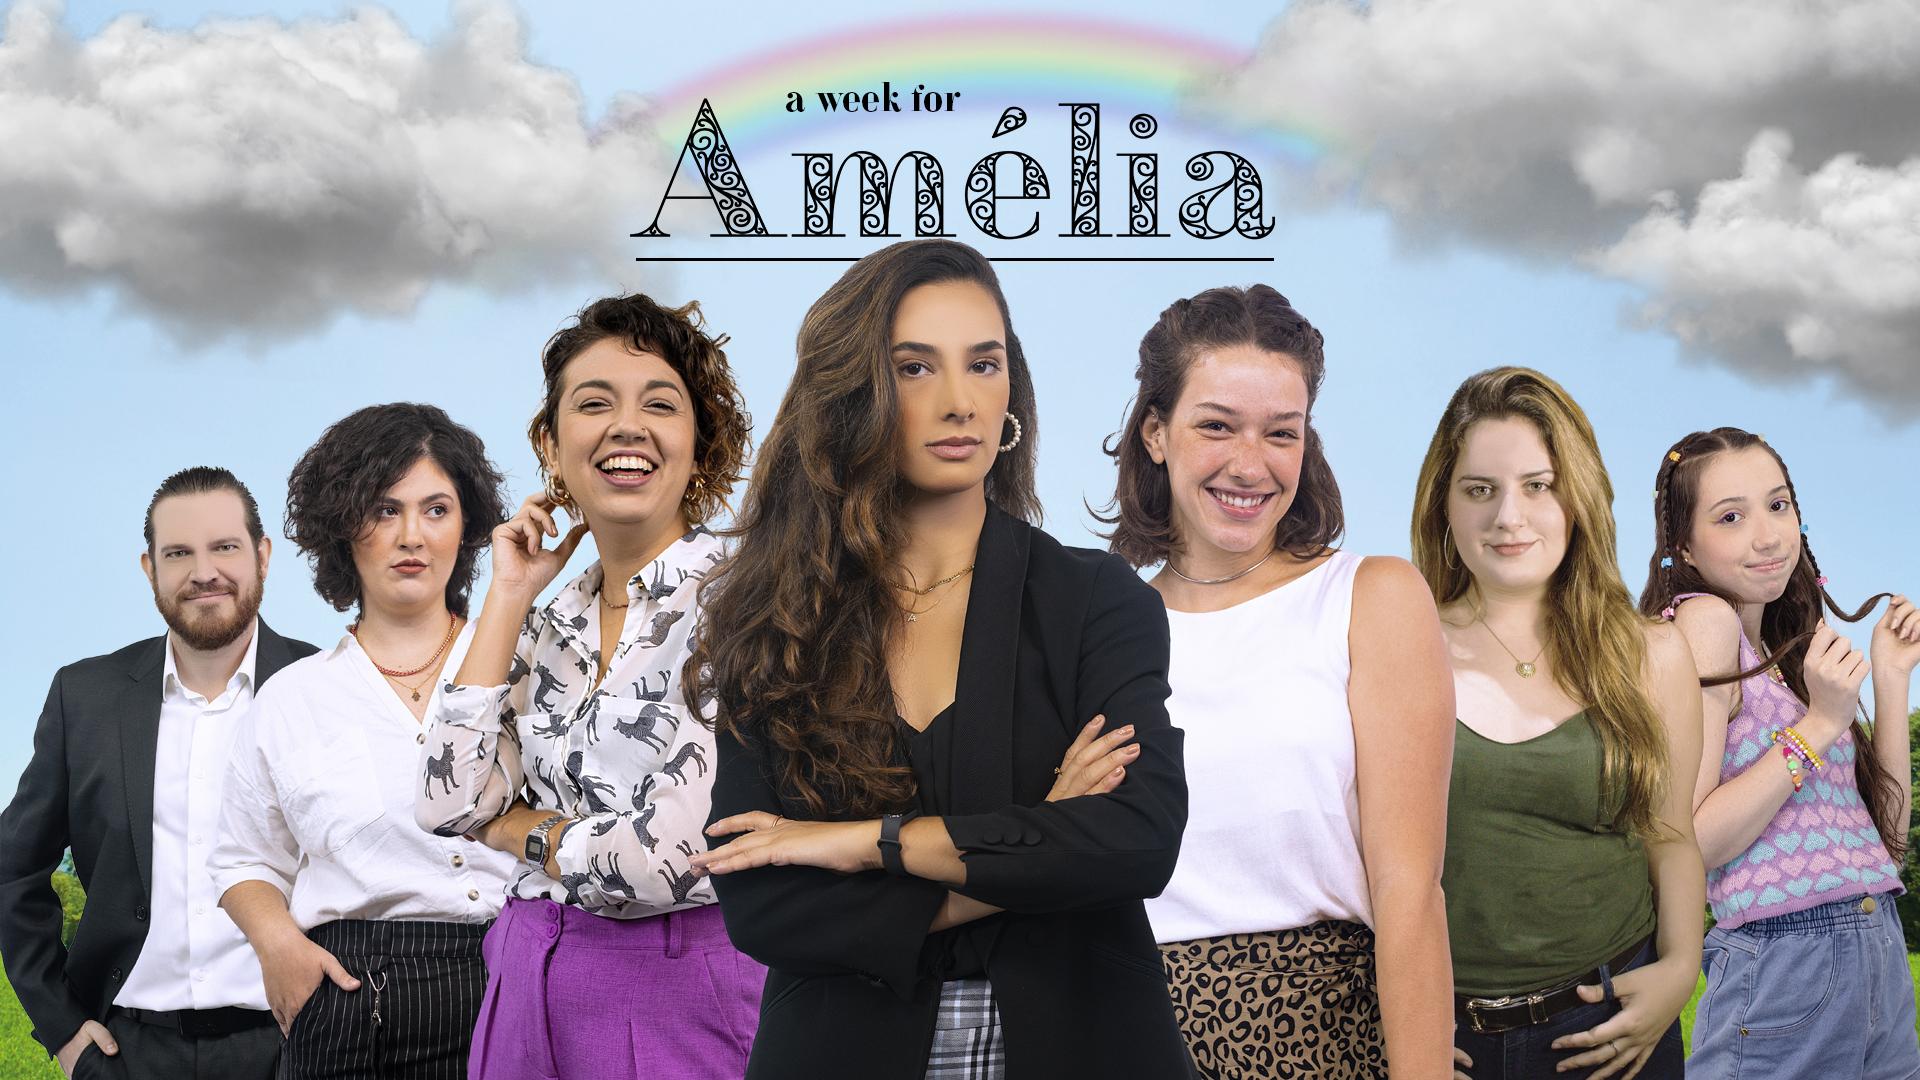 A week for Amelia